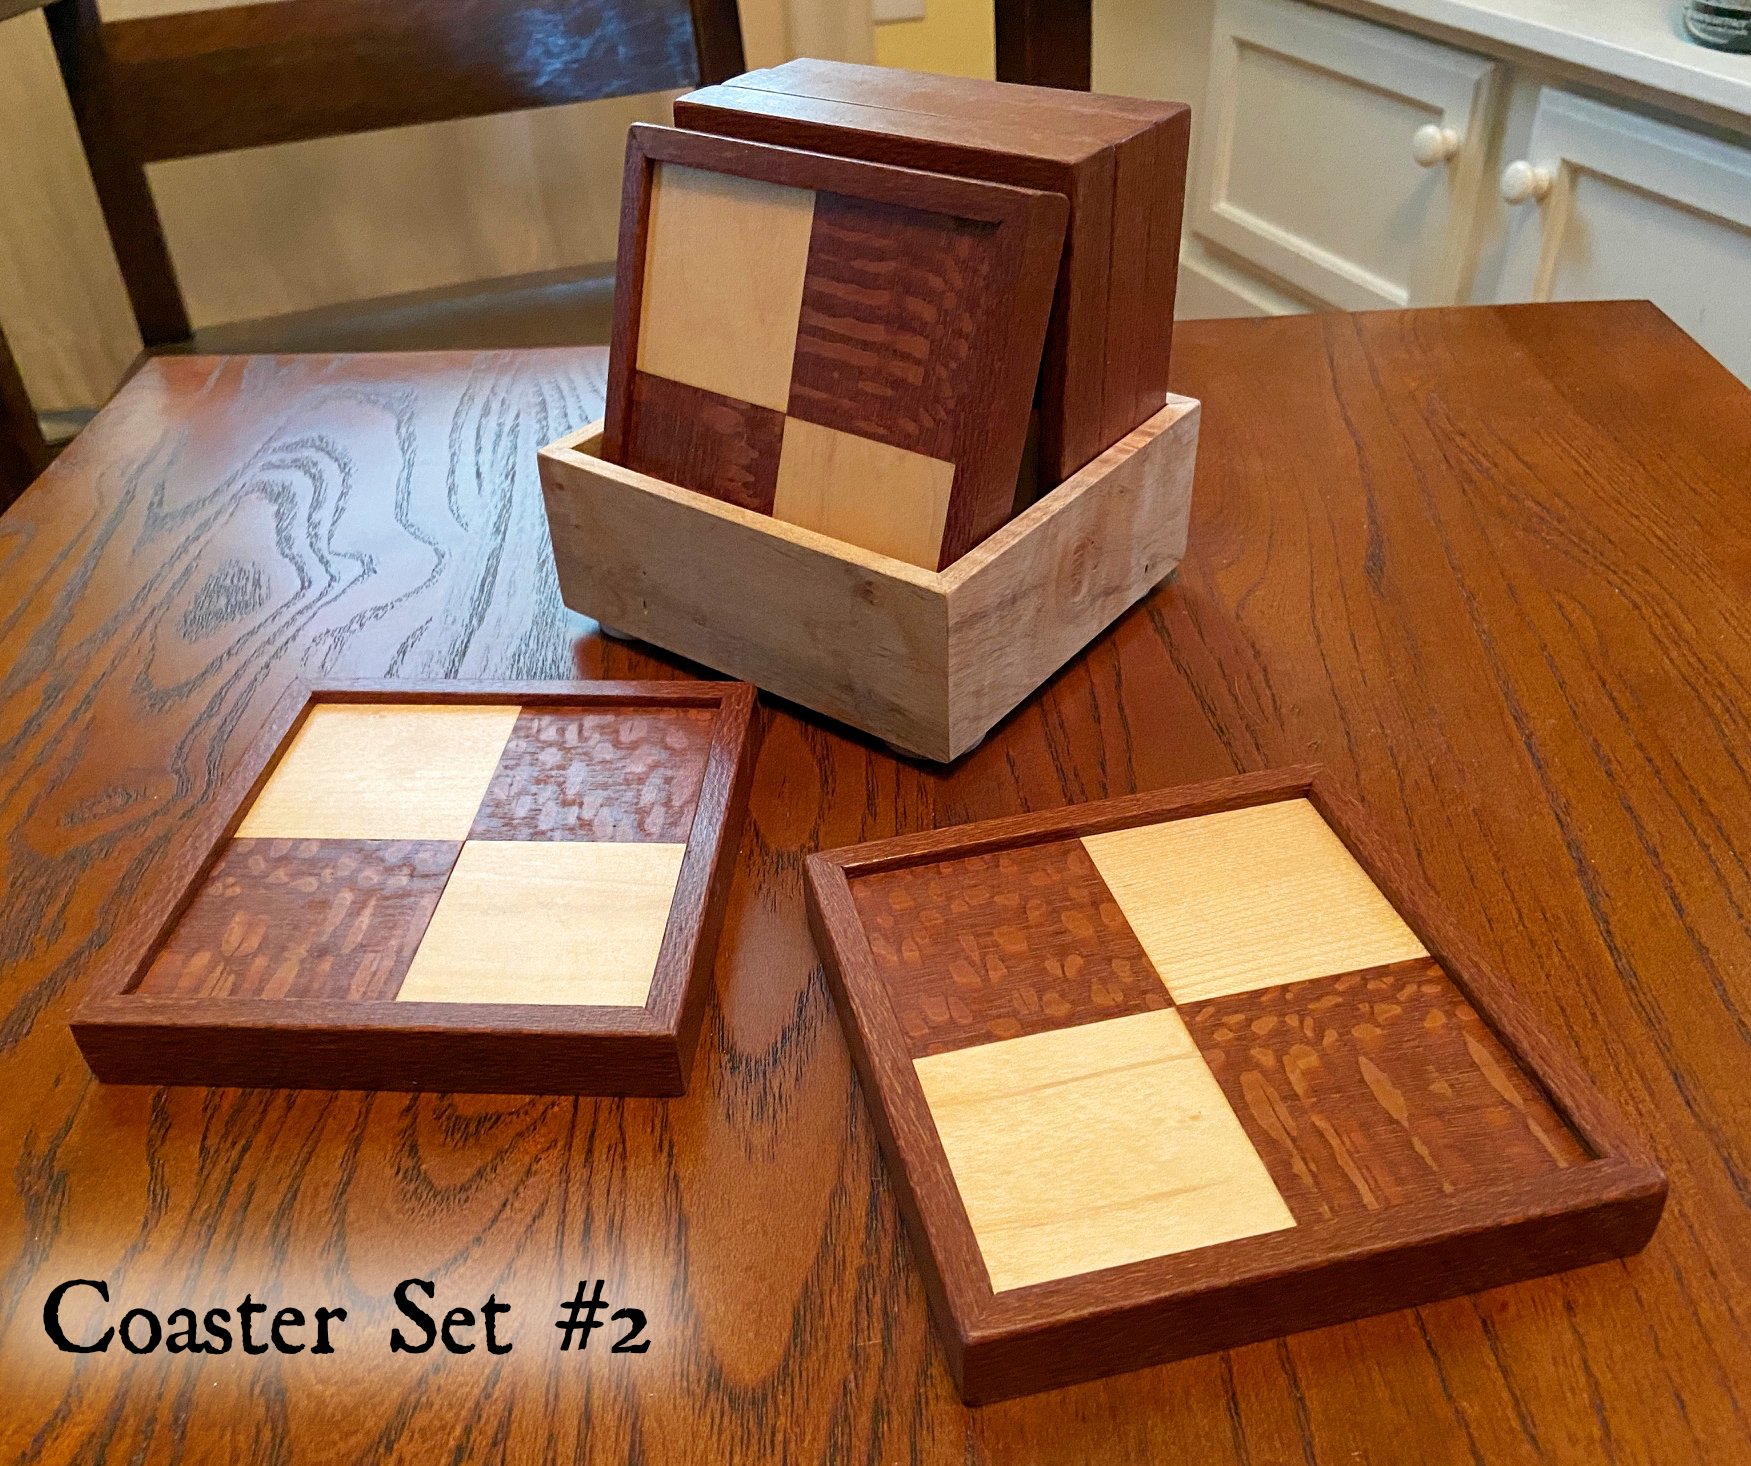 Coaster Set Prototype #2